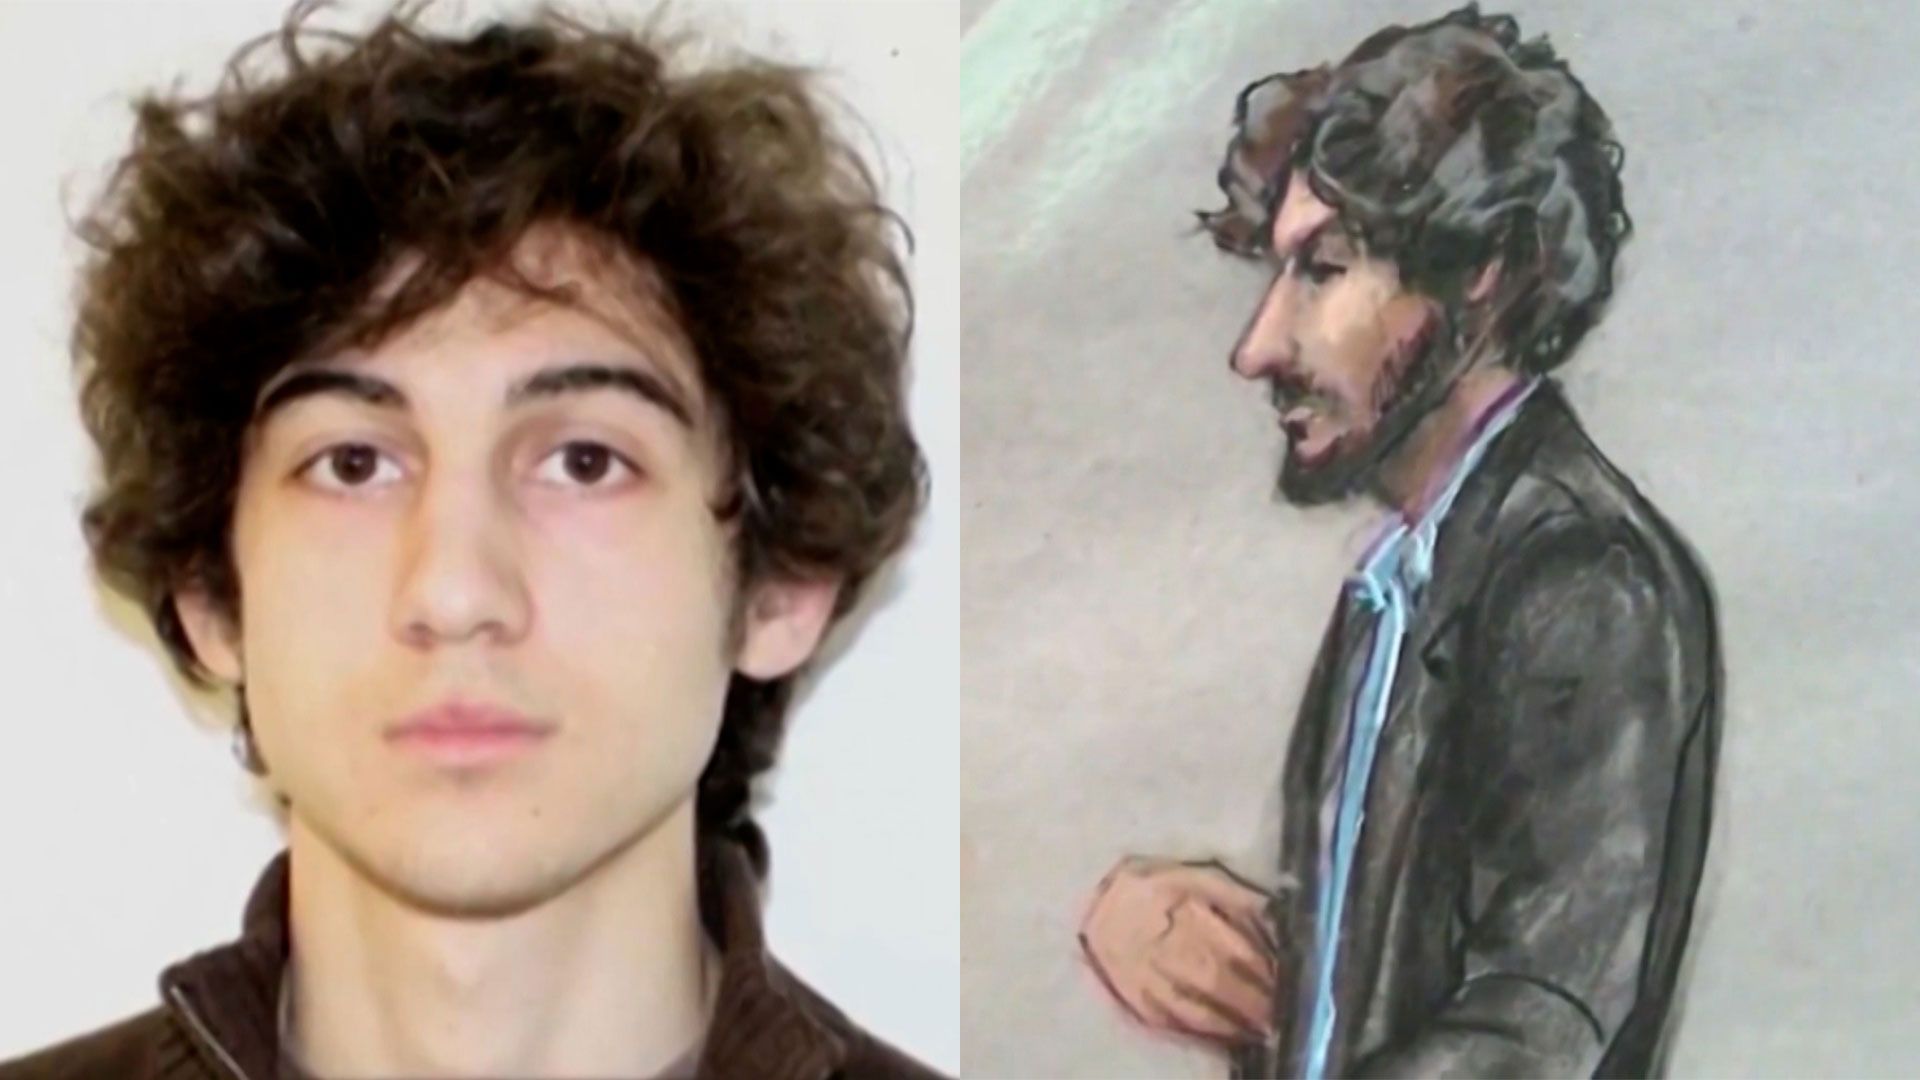 'It's upsetting': Boston Marathon bombing survivor reacts to development in Tsarnaev appeal